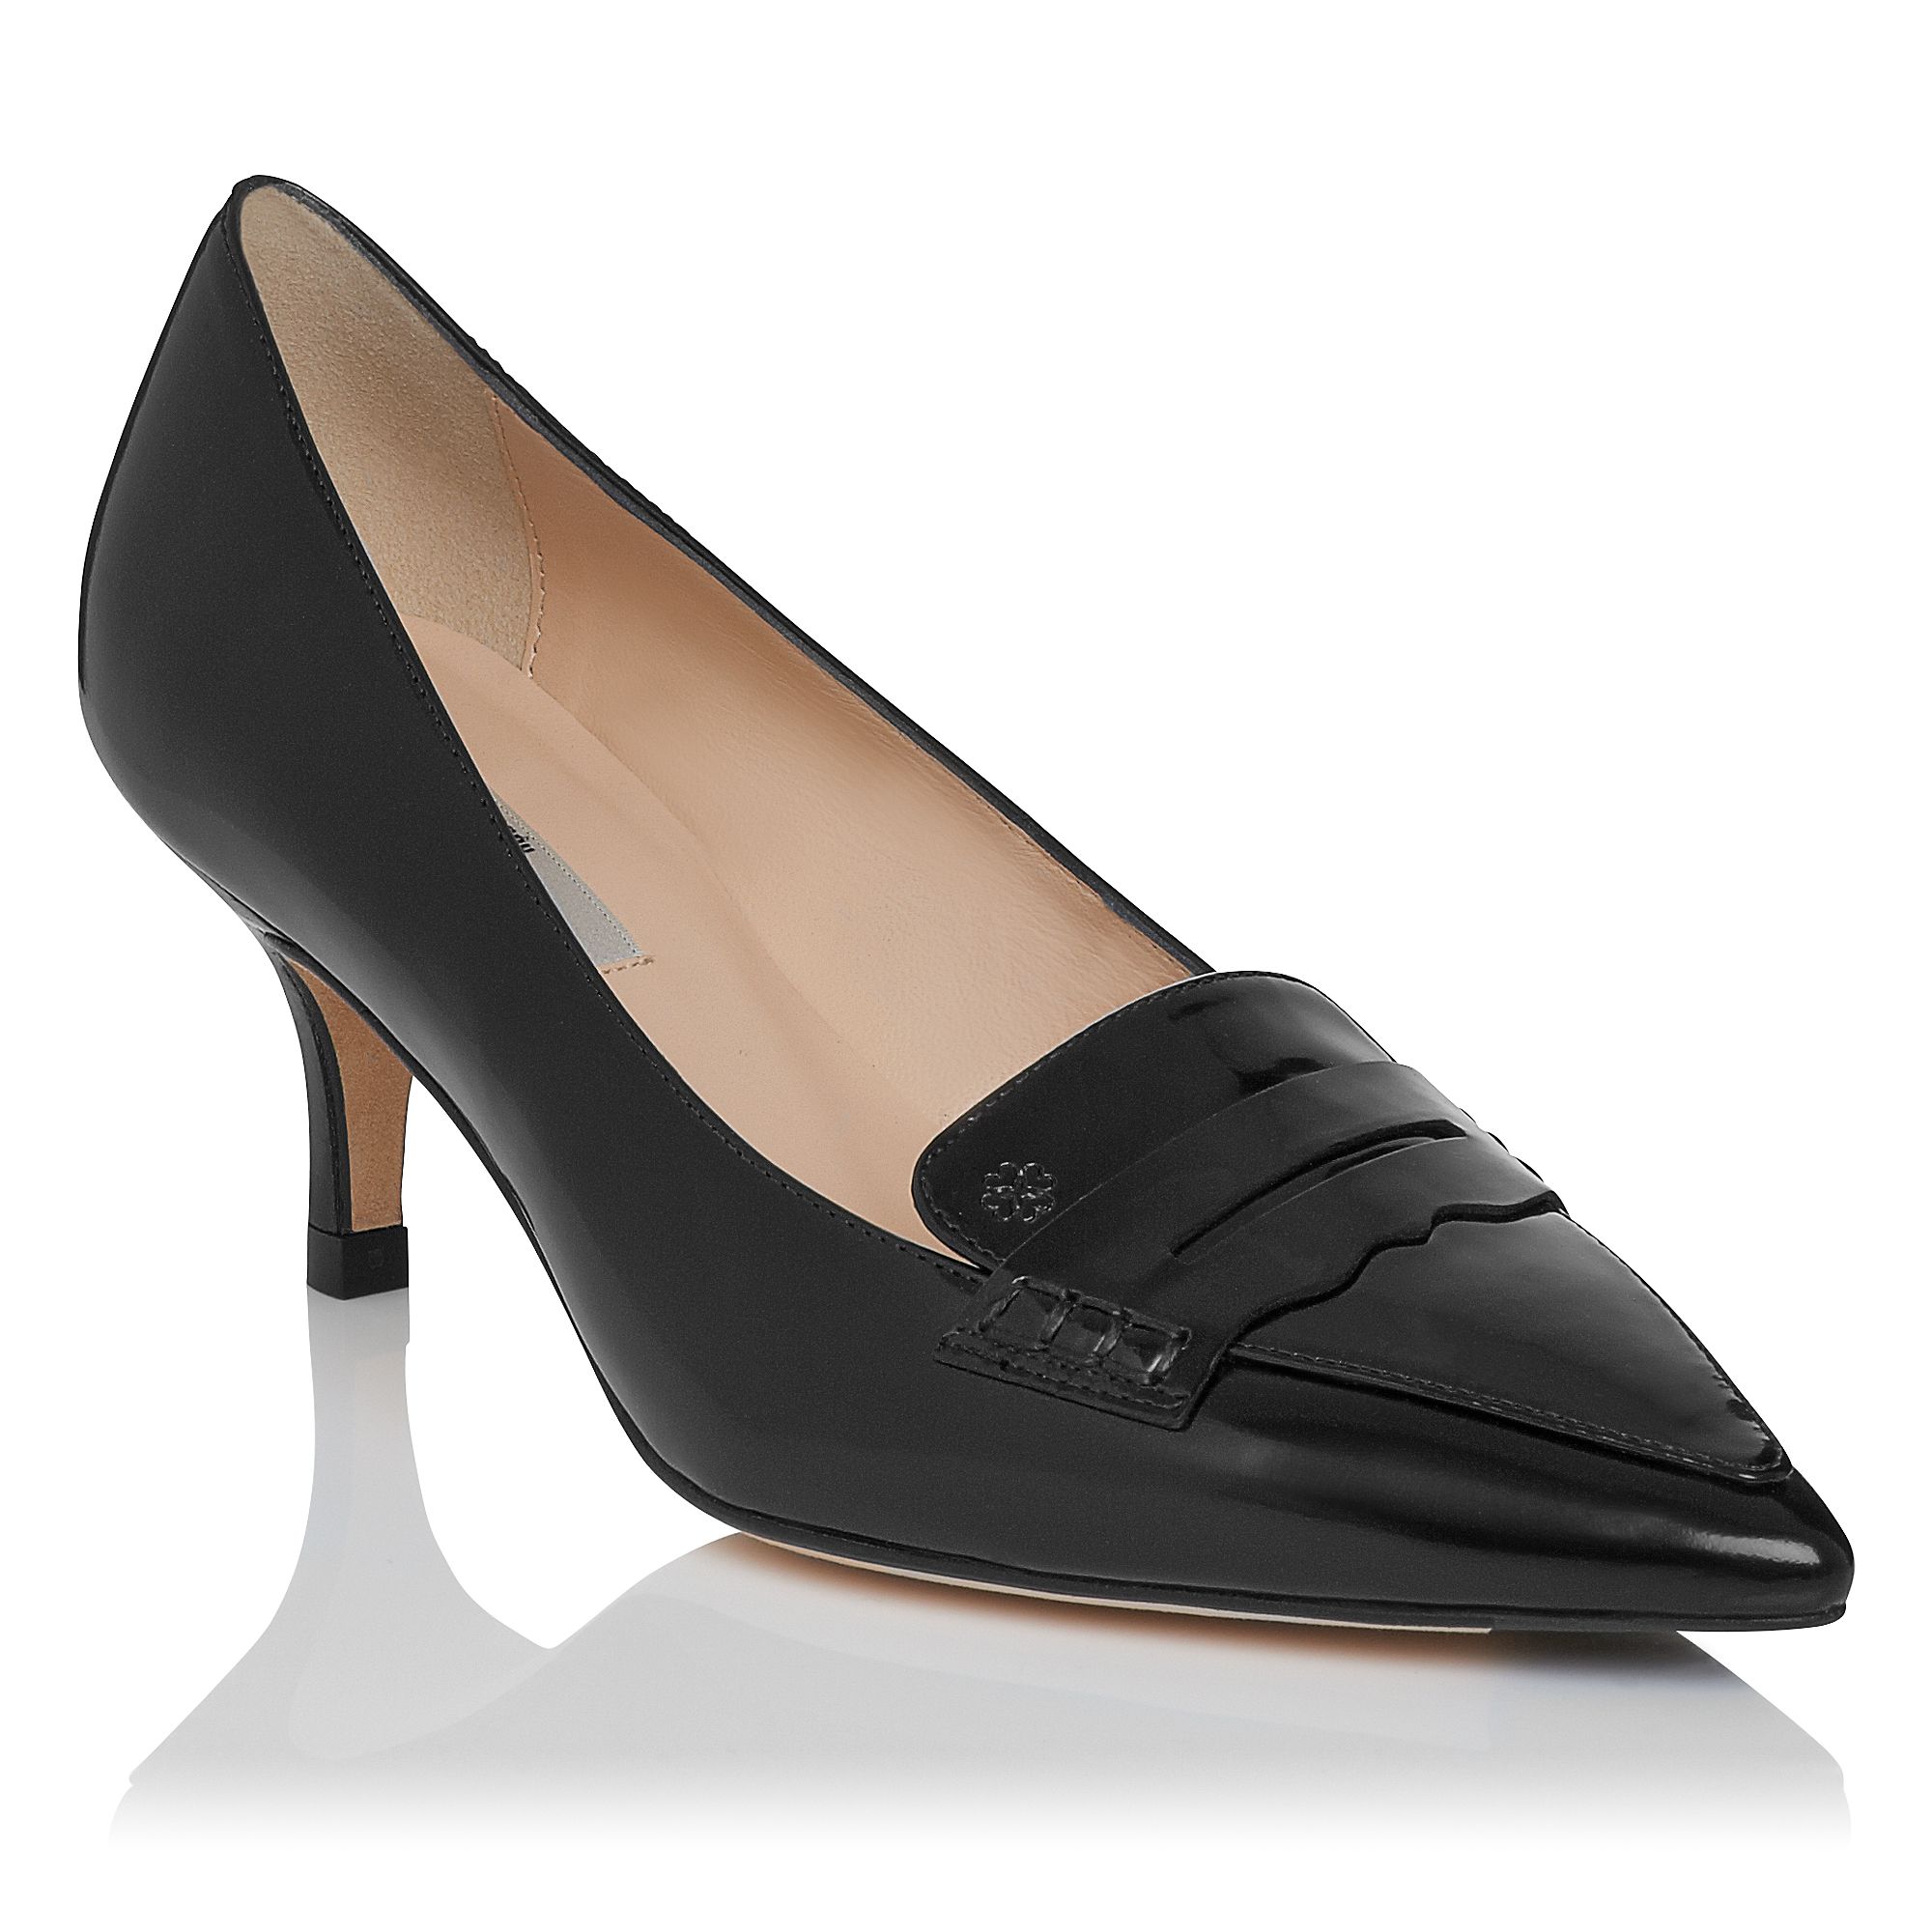 Lk Bennett Linda Pointed Toe Court Shoes in Black | Lyst